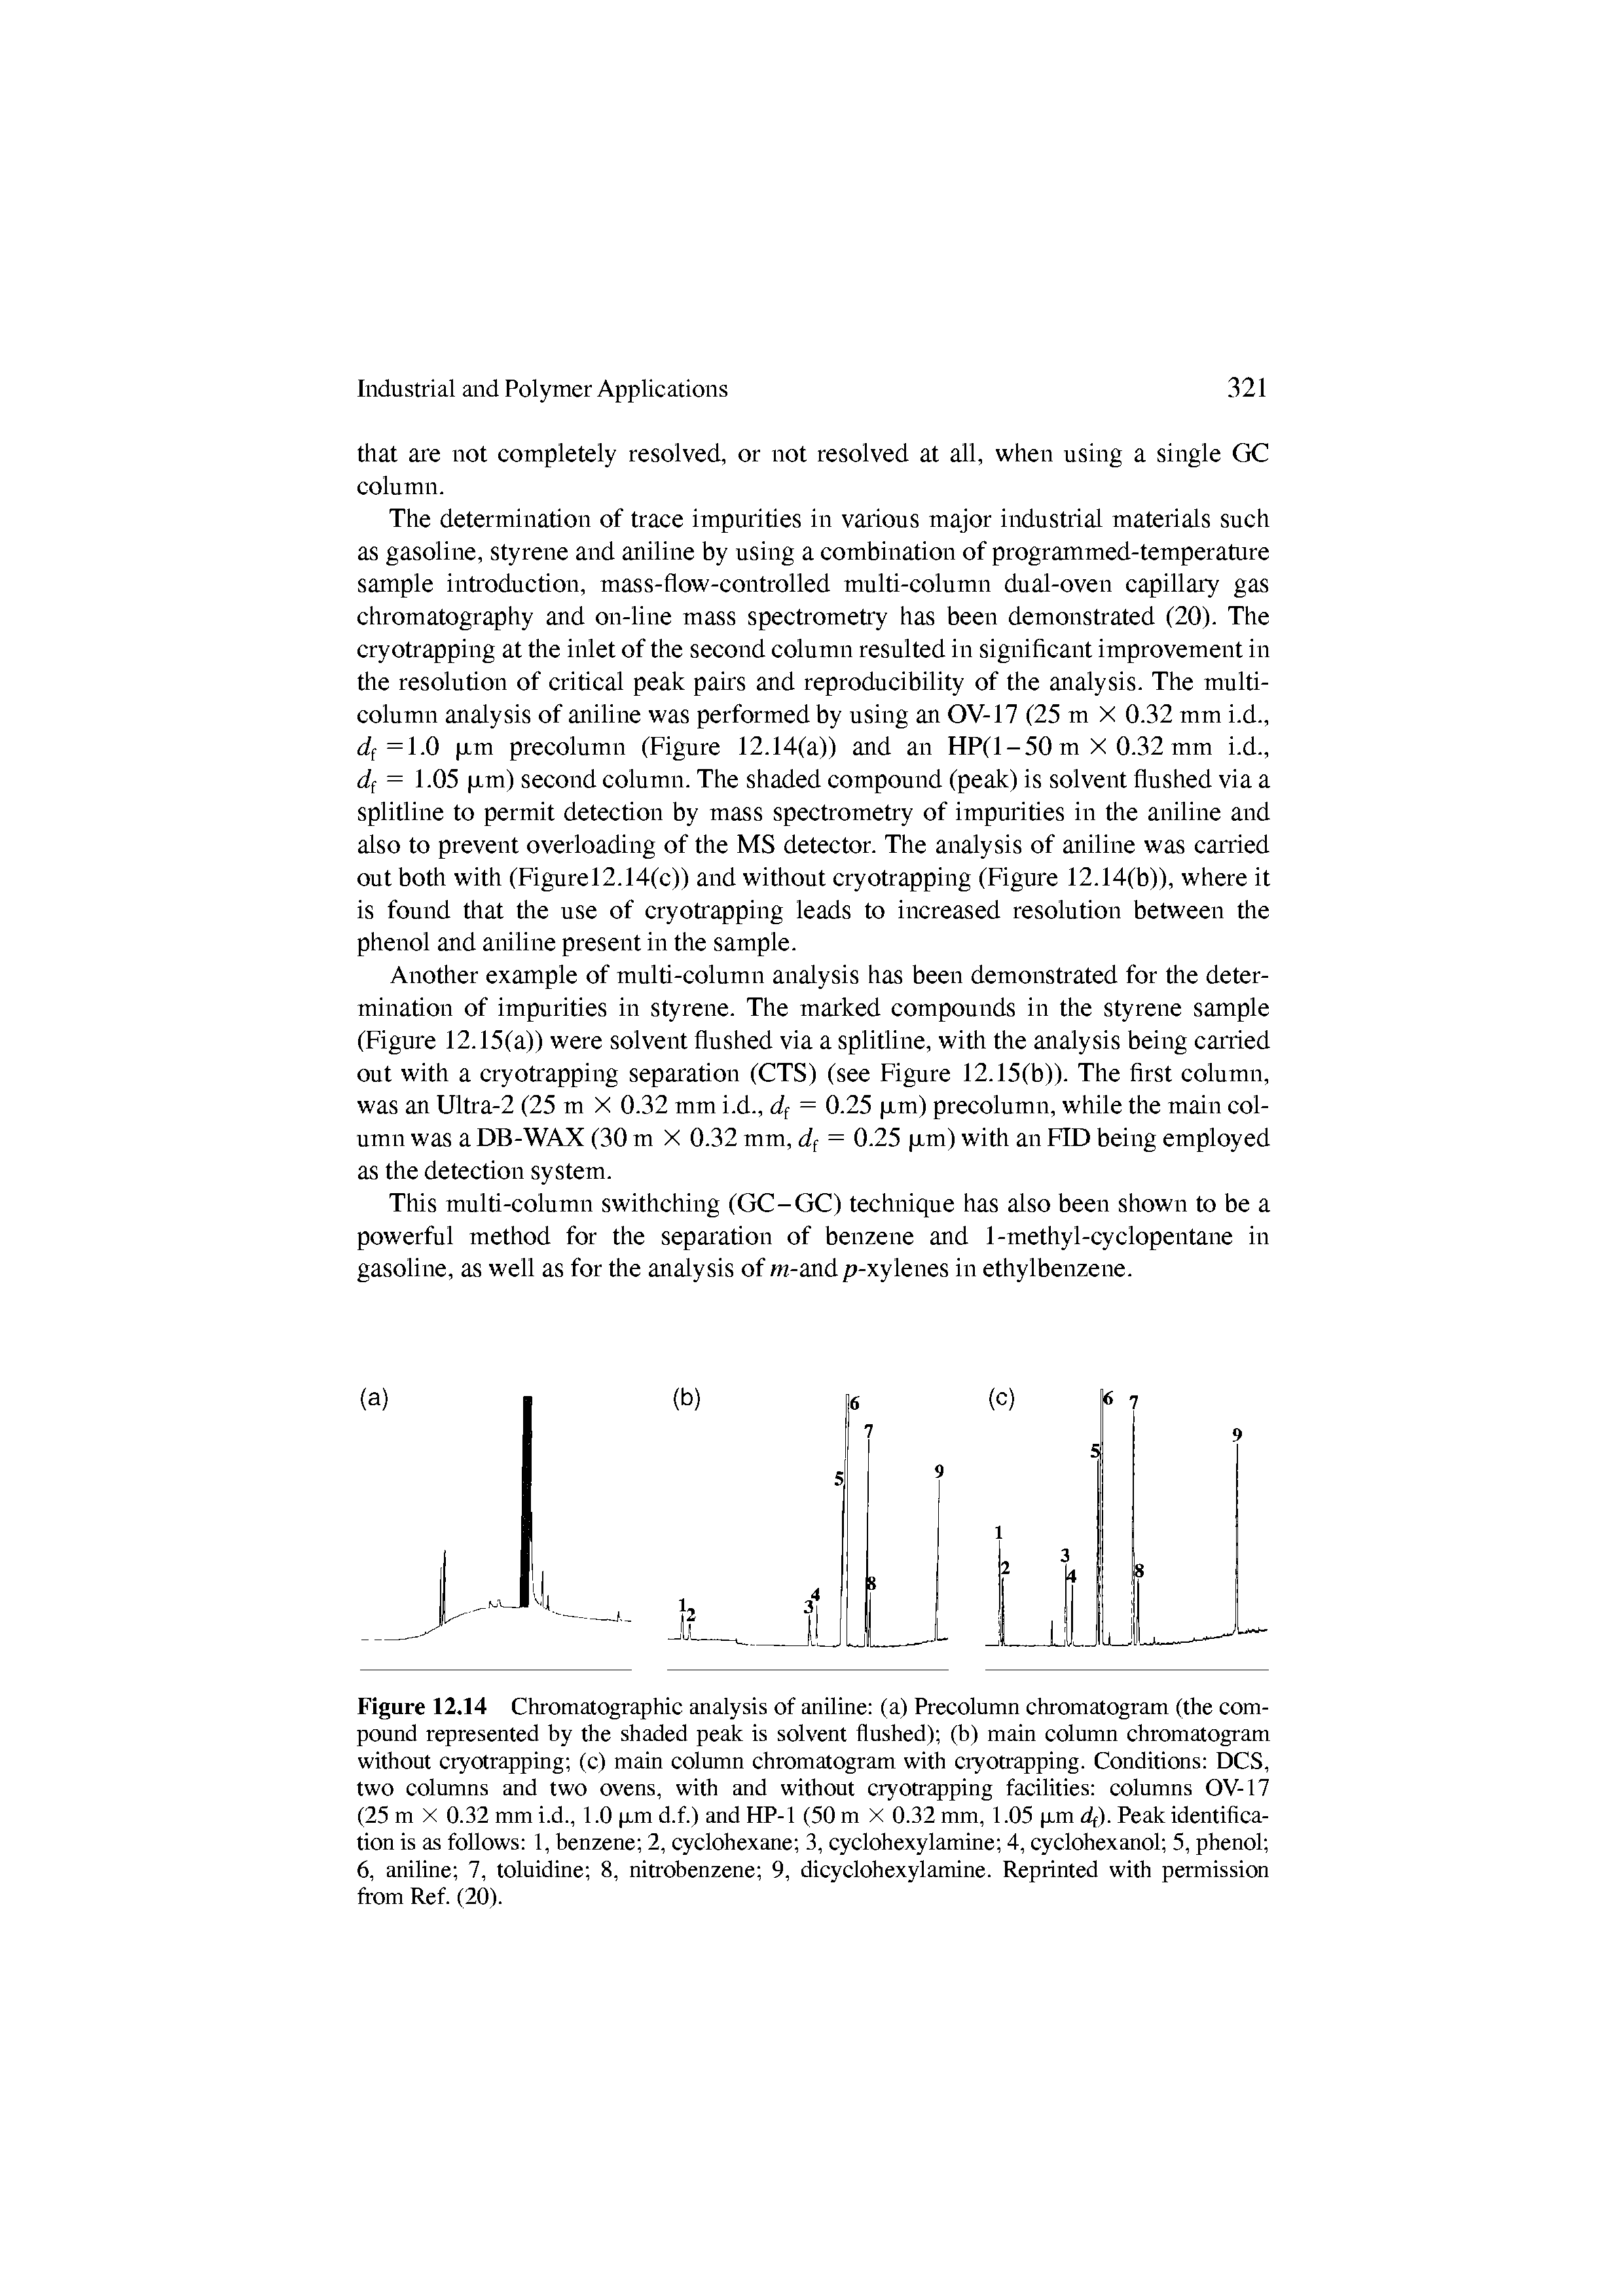 Figure 12.14 Chromatographic analysis of aniline (a) Precolumn chromatogram (the compound represented by the shaded peak is solvent flushed) (b) main column chromatogram without cryotrapping (c) main column chromatogram with ciyottapping. Conditions DCS, two columns and two ovens, with and without ciyottapping facilities columns OV-17 (25 m X 0.32 mm i.d., 1.0 p.m d.f.) and HP-1 (50 m X 0.32 mm, 1.05 p.m df). Peak identification is as follows 1, benzene 2, cyclohexane 3, cyclohexylamine 4, cyclohexanol 5, phenol 6, aniline 7, toluidine 8, nittobenzene 9, dicyclohexylamine. Reprinted with permission from Ref. (20).